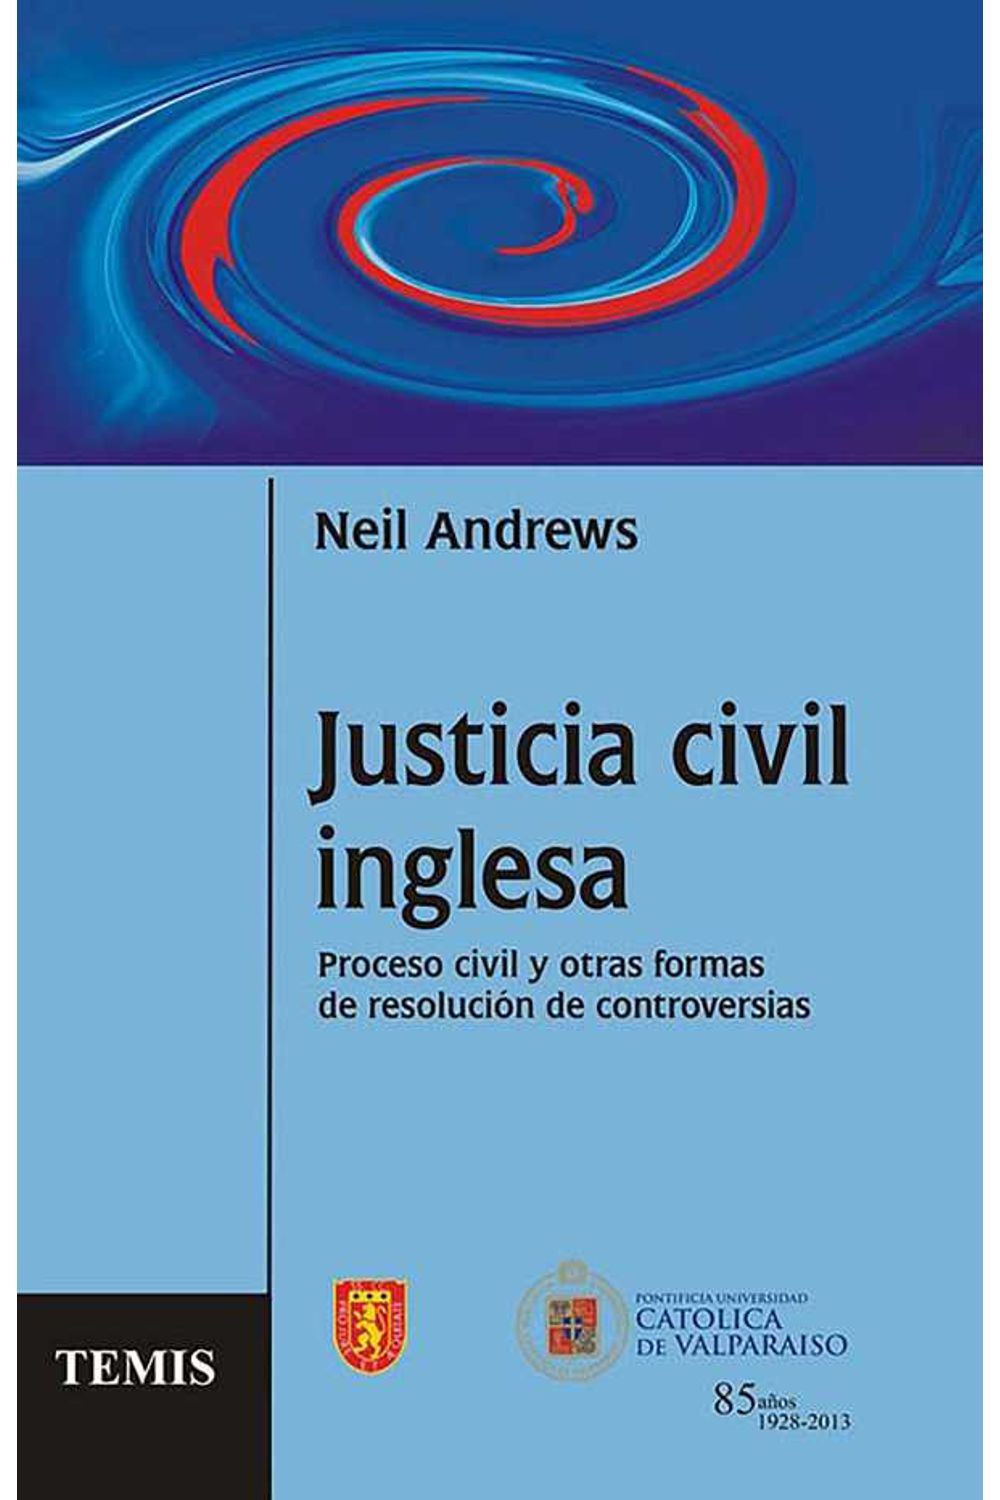 bw-justicia-civil-inglesa-temis-9789583514364